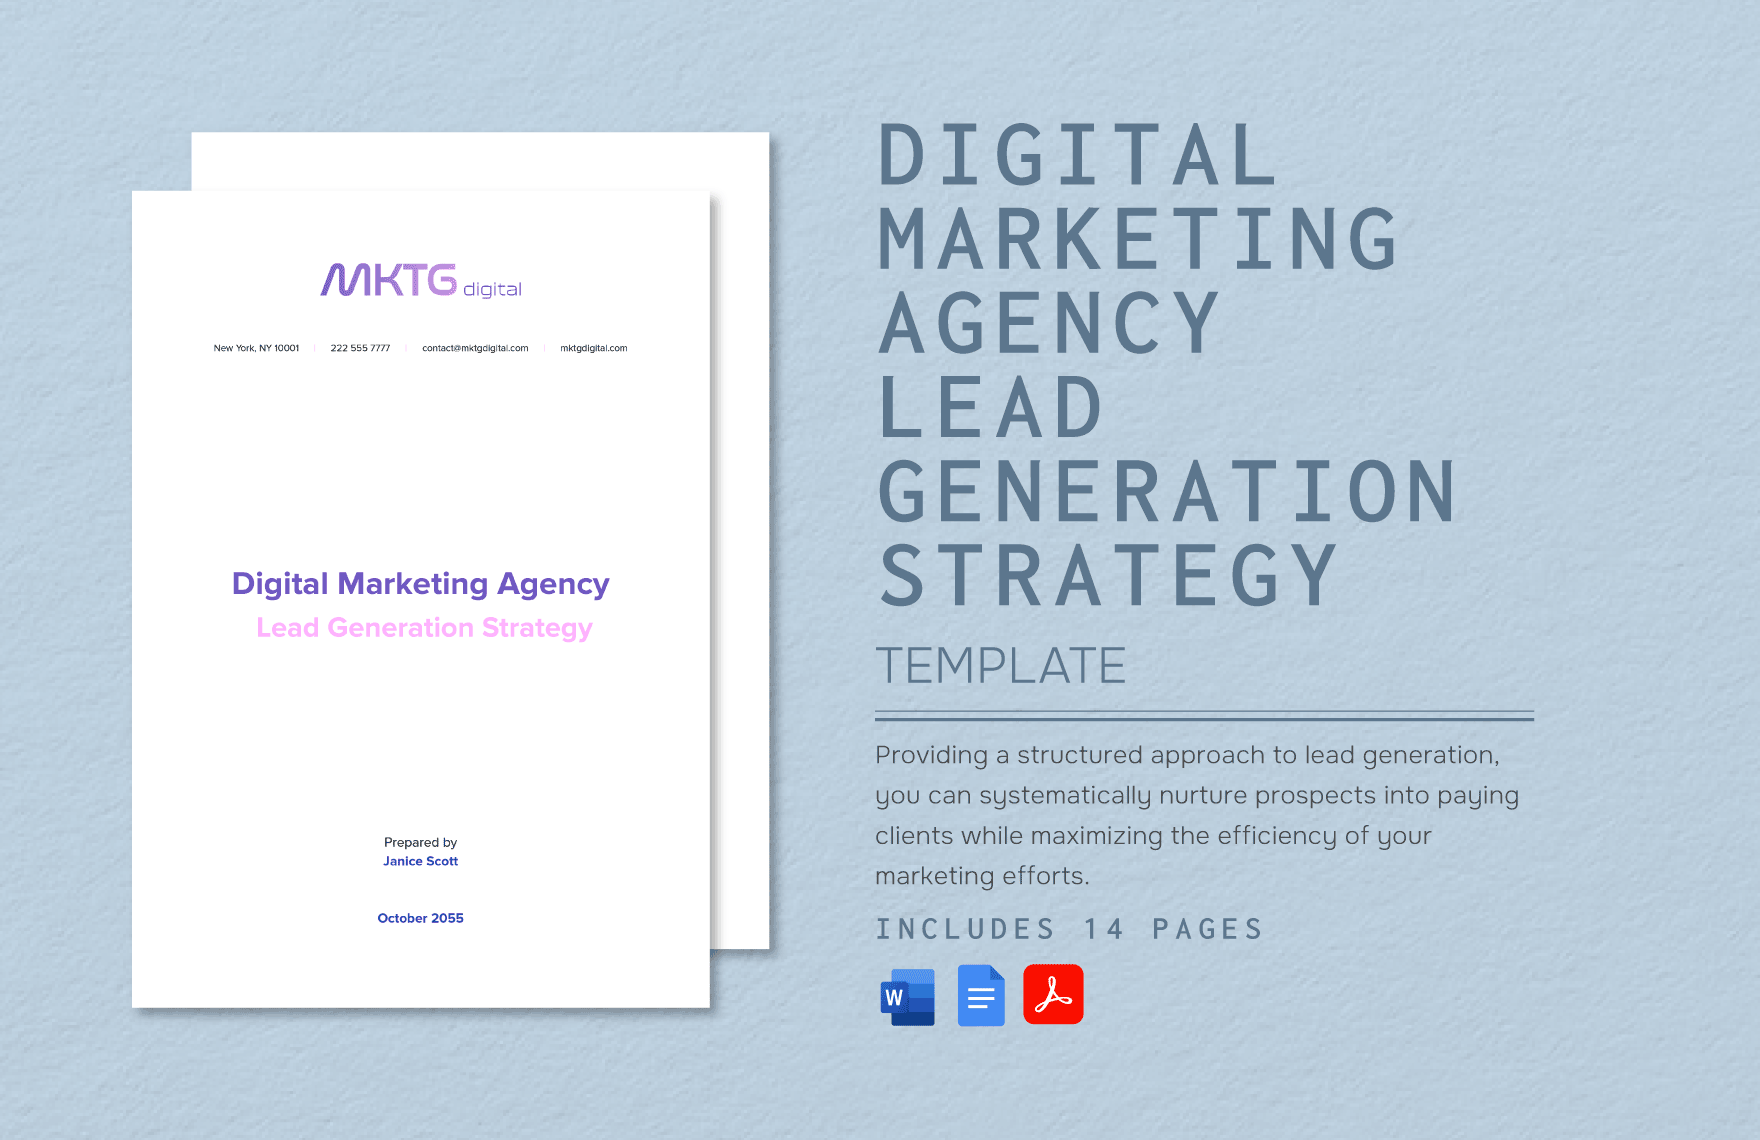 Digital Marketing Agency Lead Generation Strategy Template